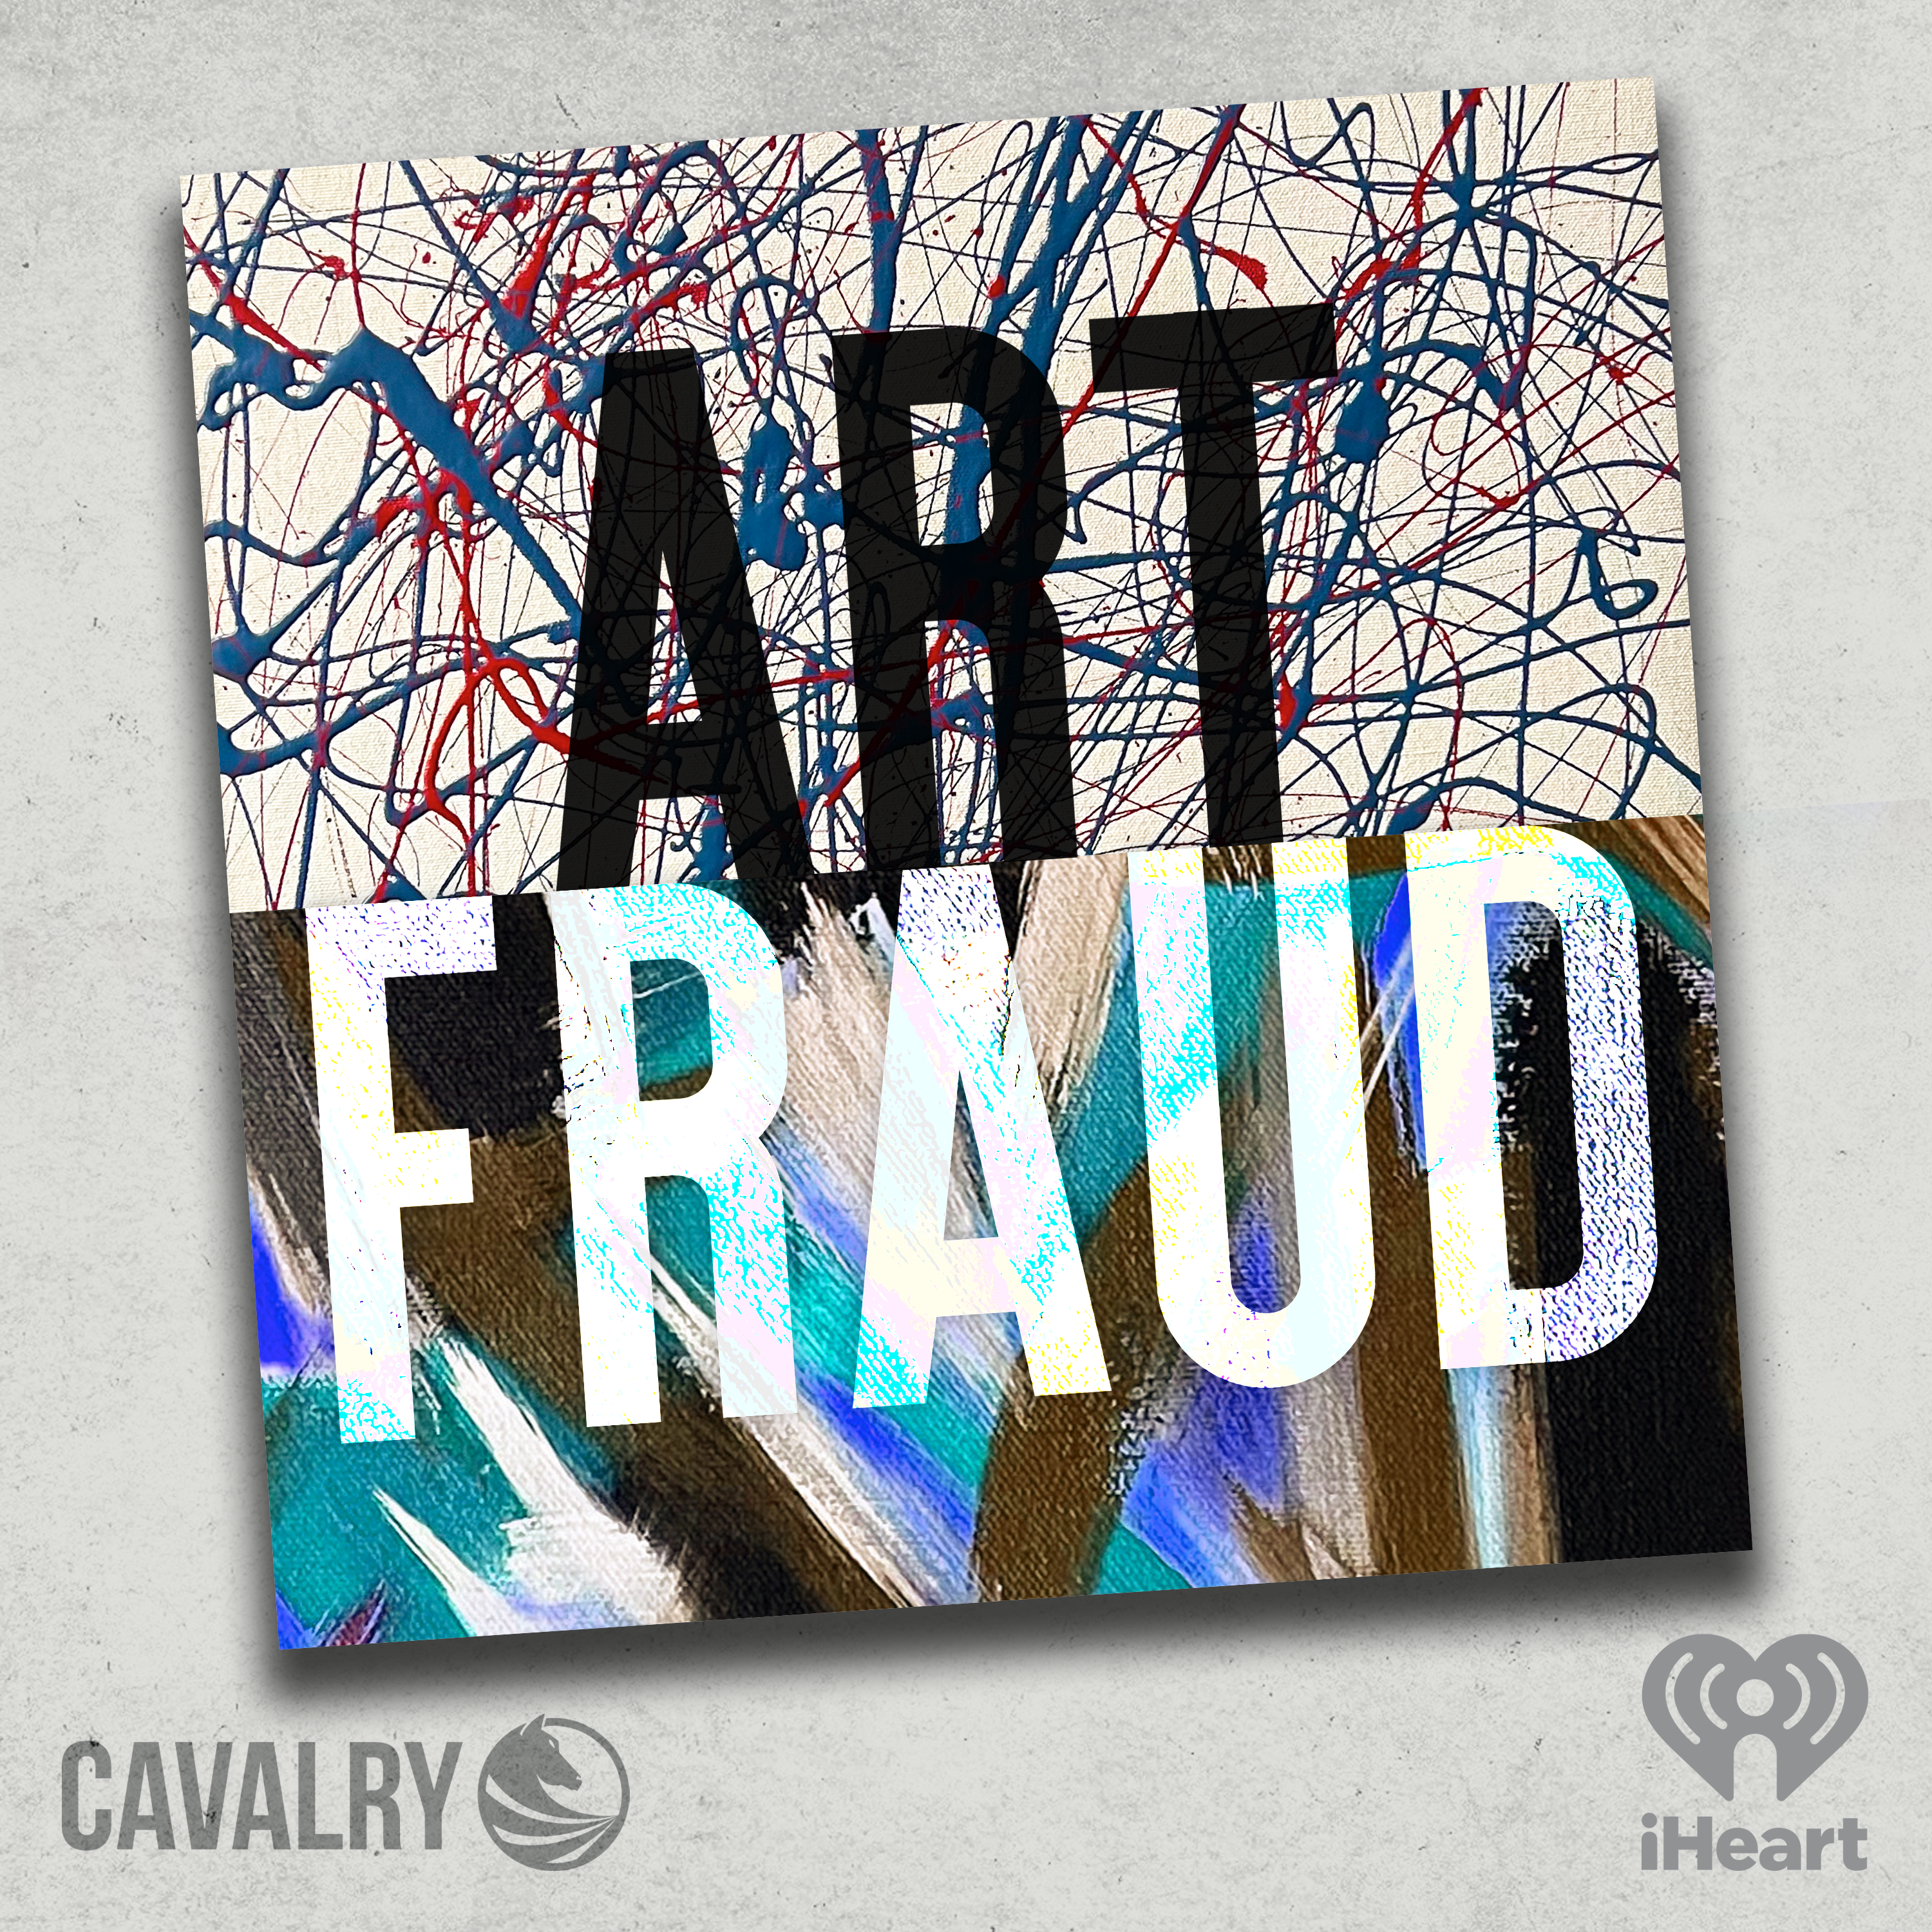 Introducing: Art Fraud